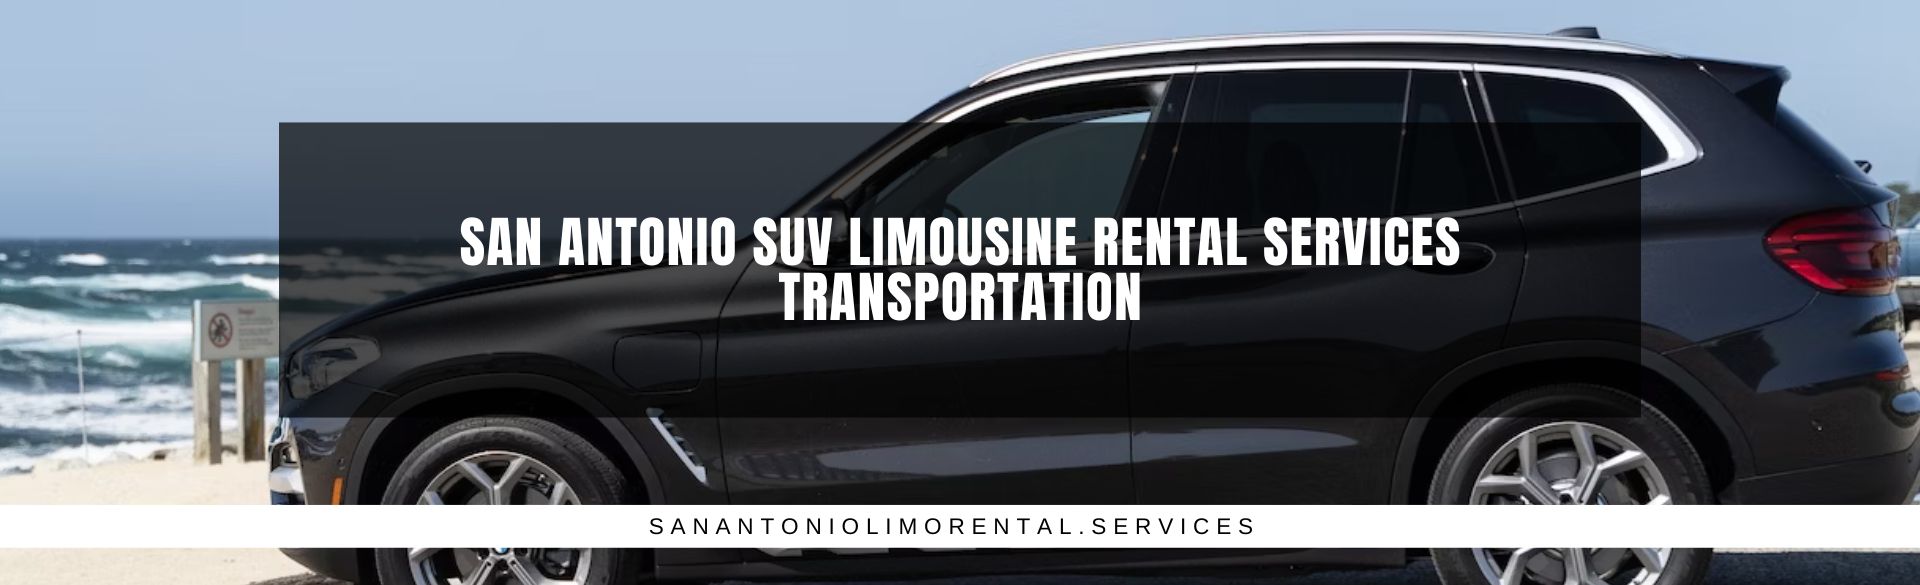 San Antonio SUV limousine rental services transportation